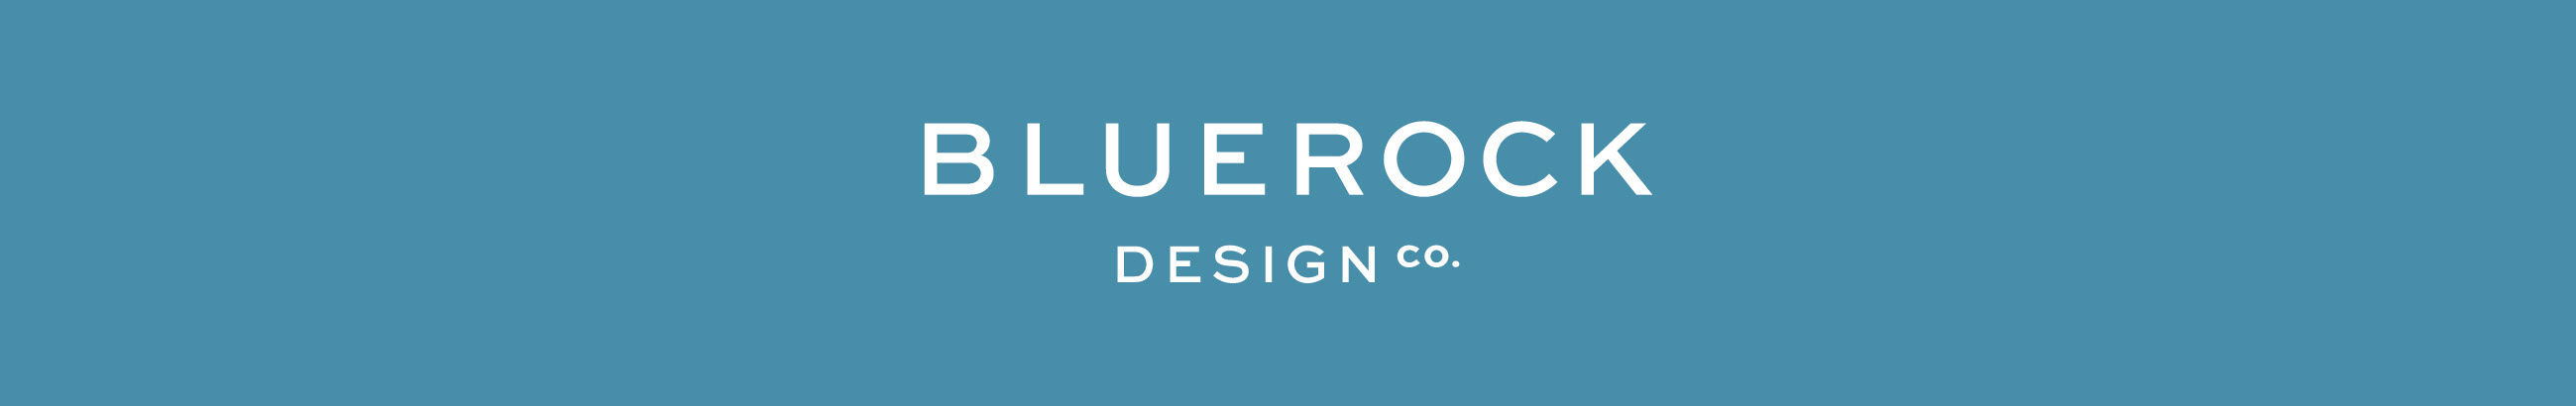 Banner de perfil de Bluerock Design Co.